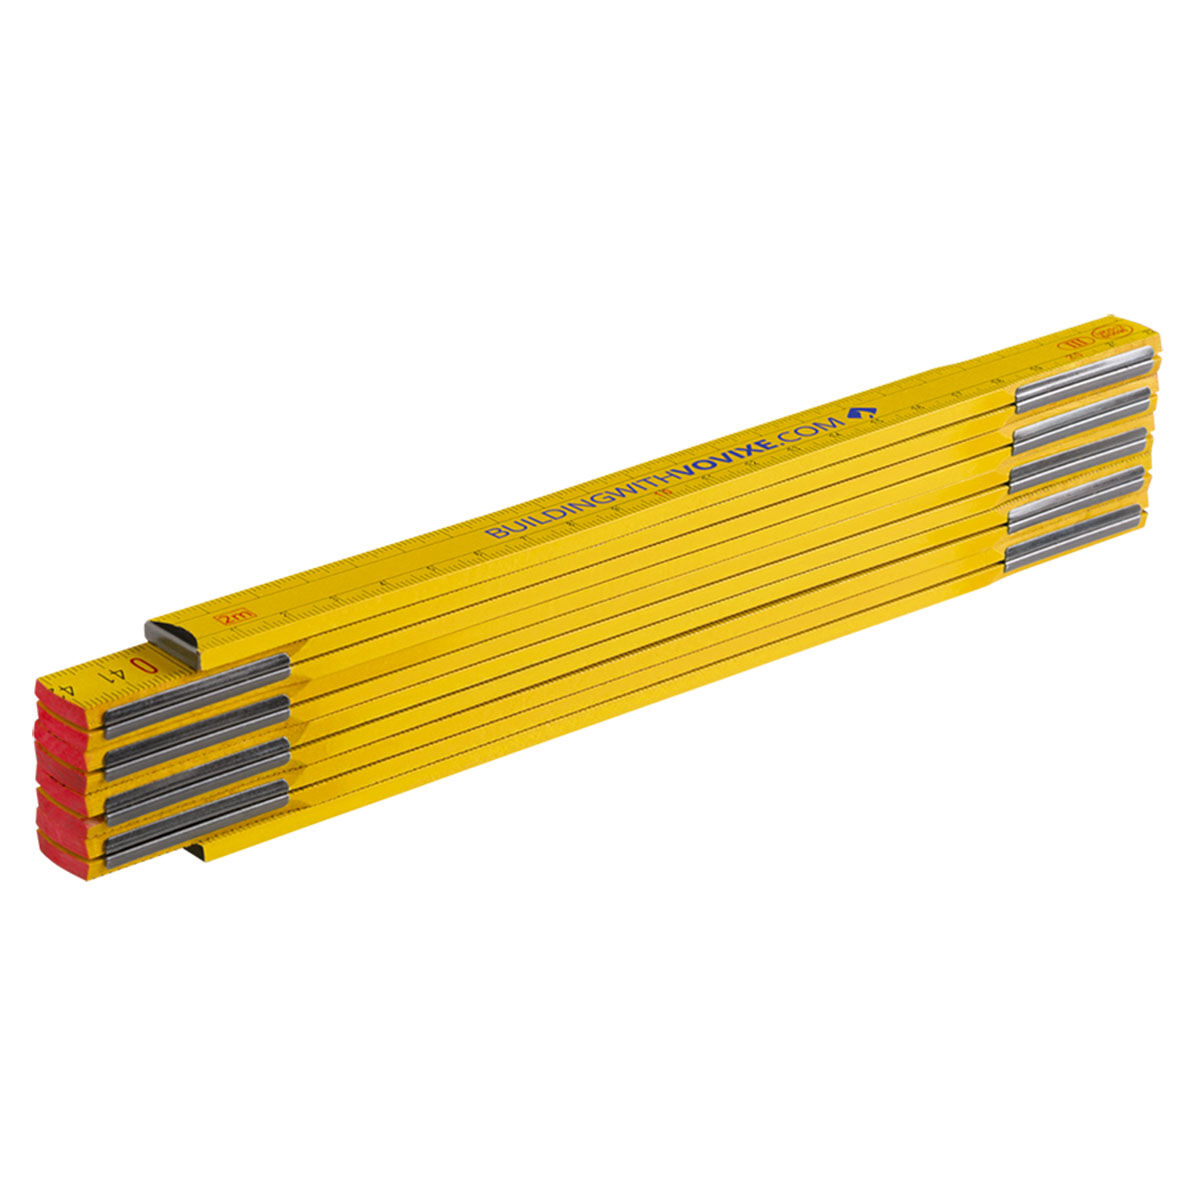 2 Metre Folding Ruler Yellow